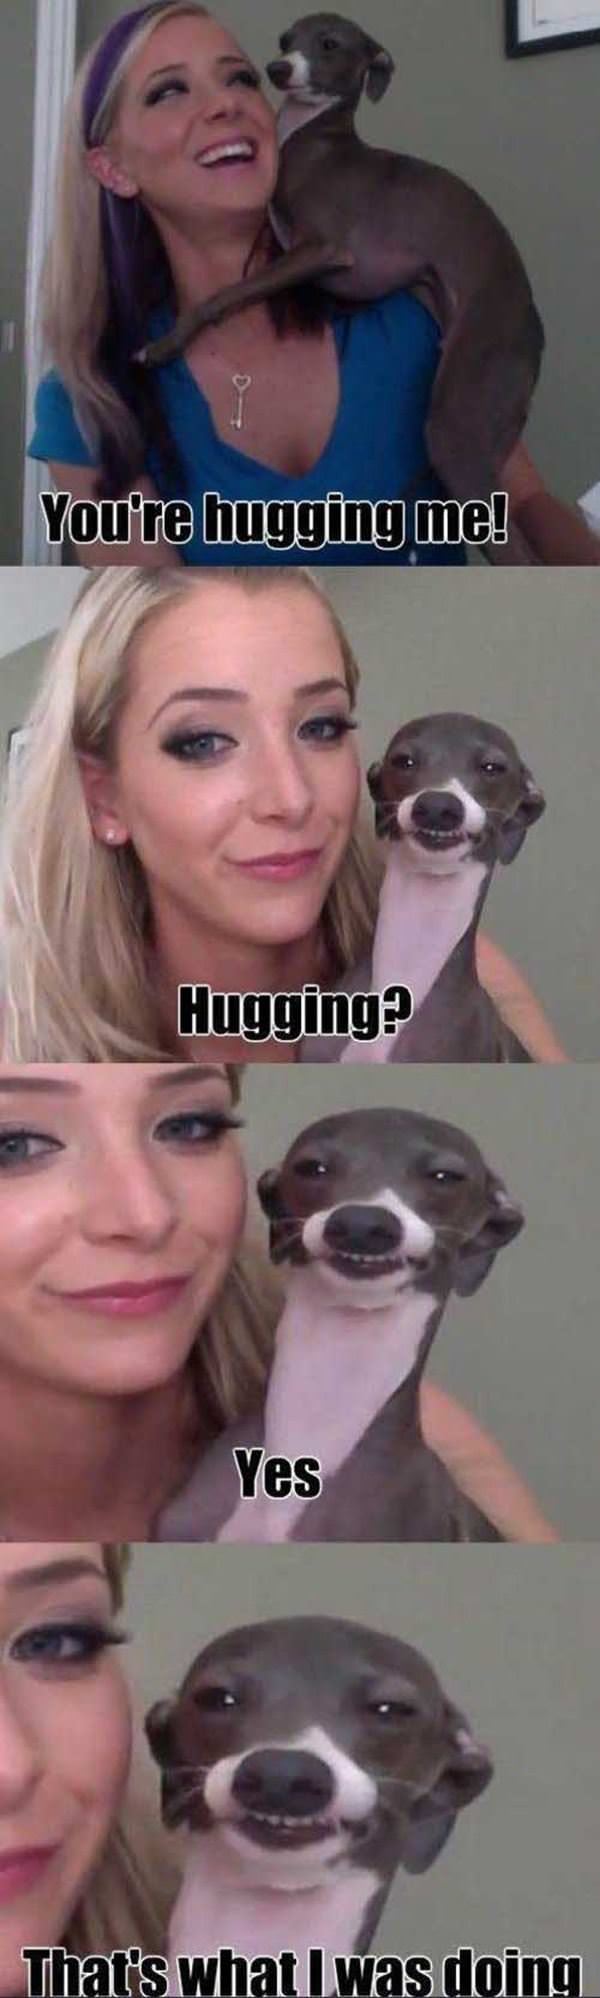 Hugging.jpg